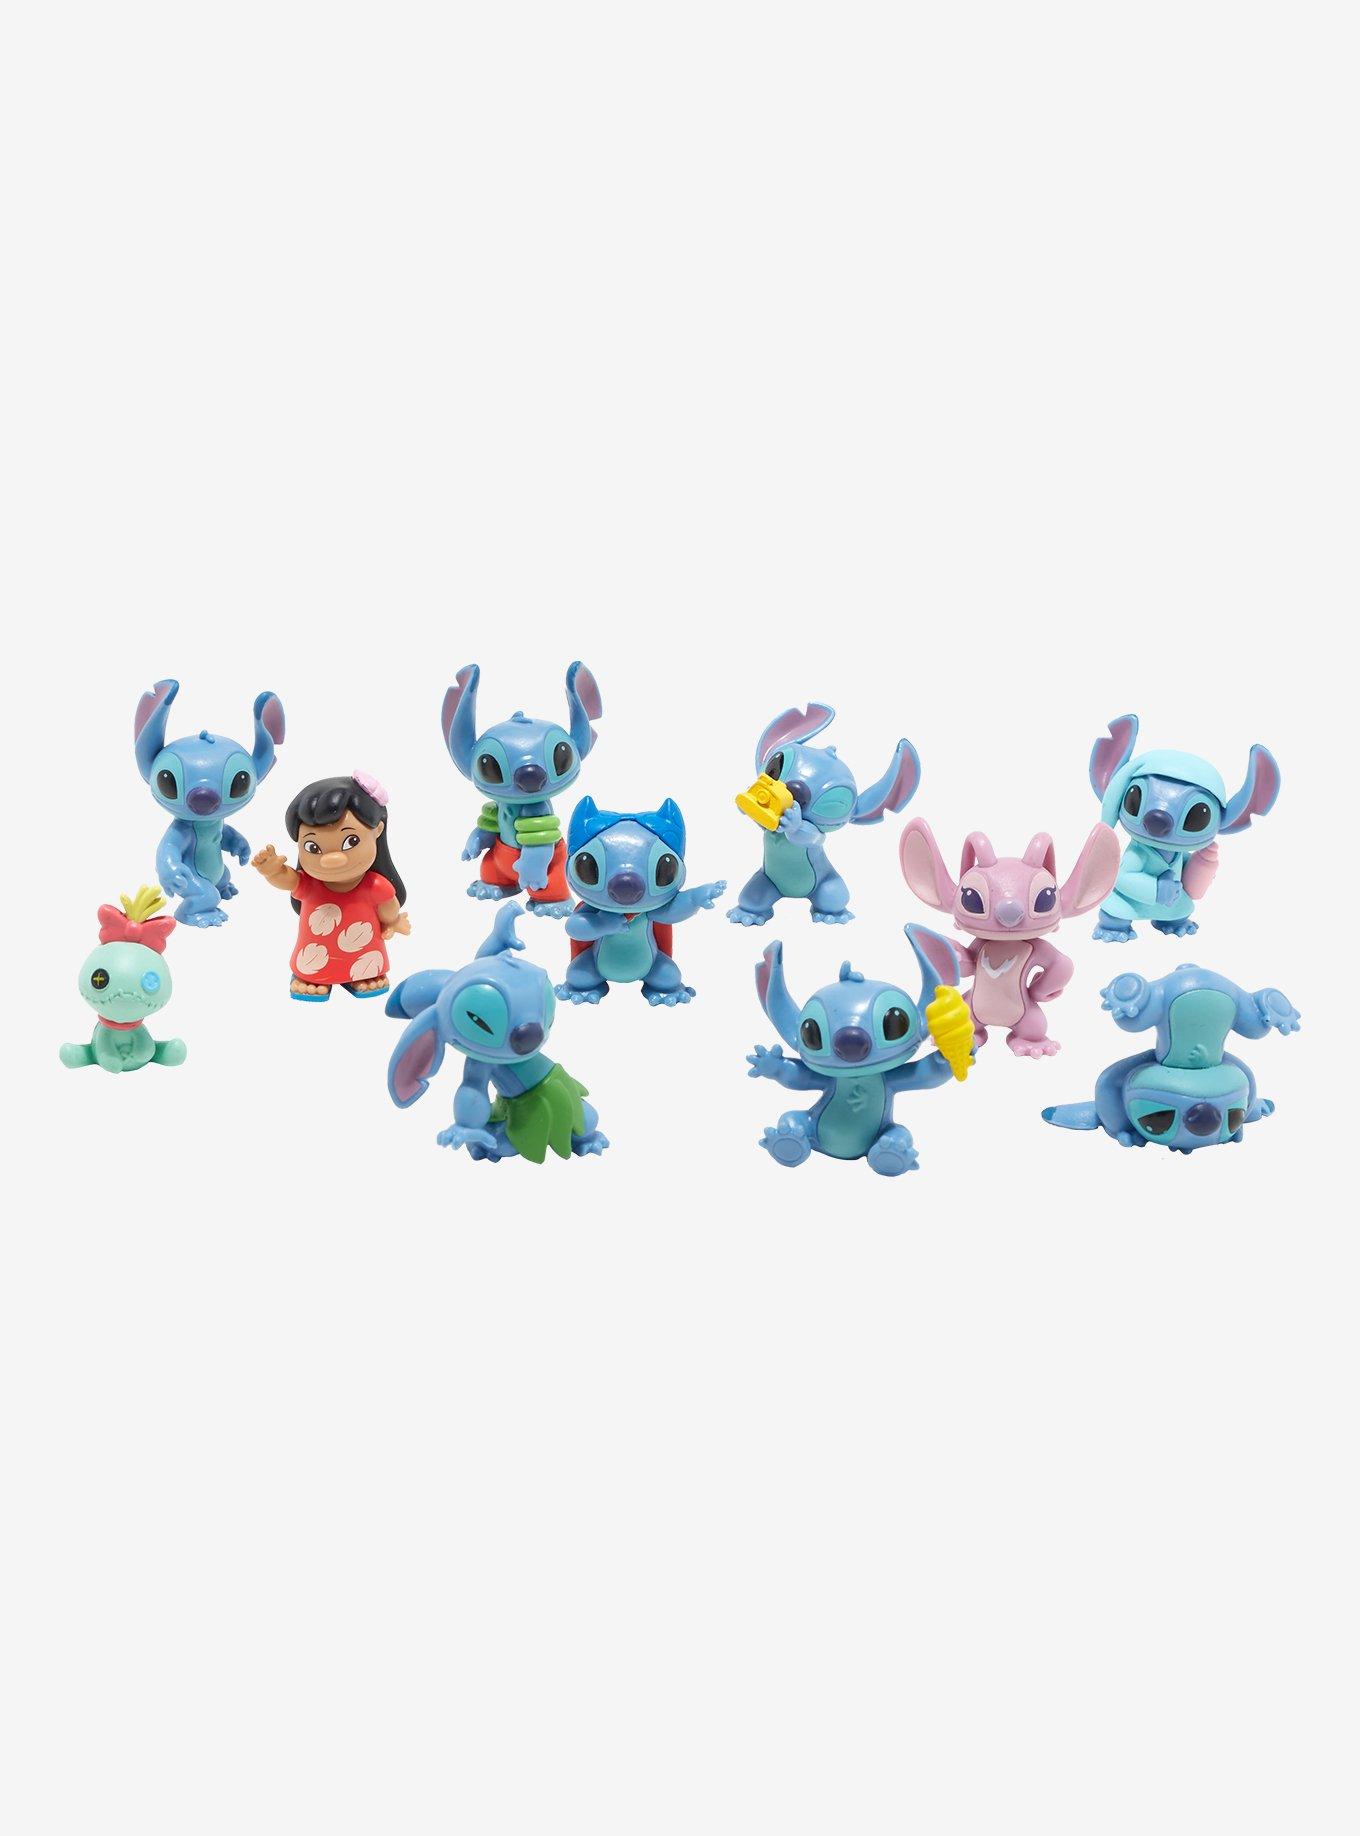 Bedtime Lilo & Stitch - Lilo & Stitch - Basic Series - Hasbro Action Figure